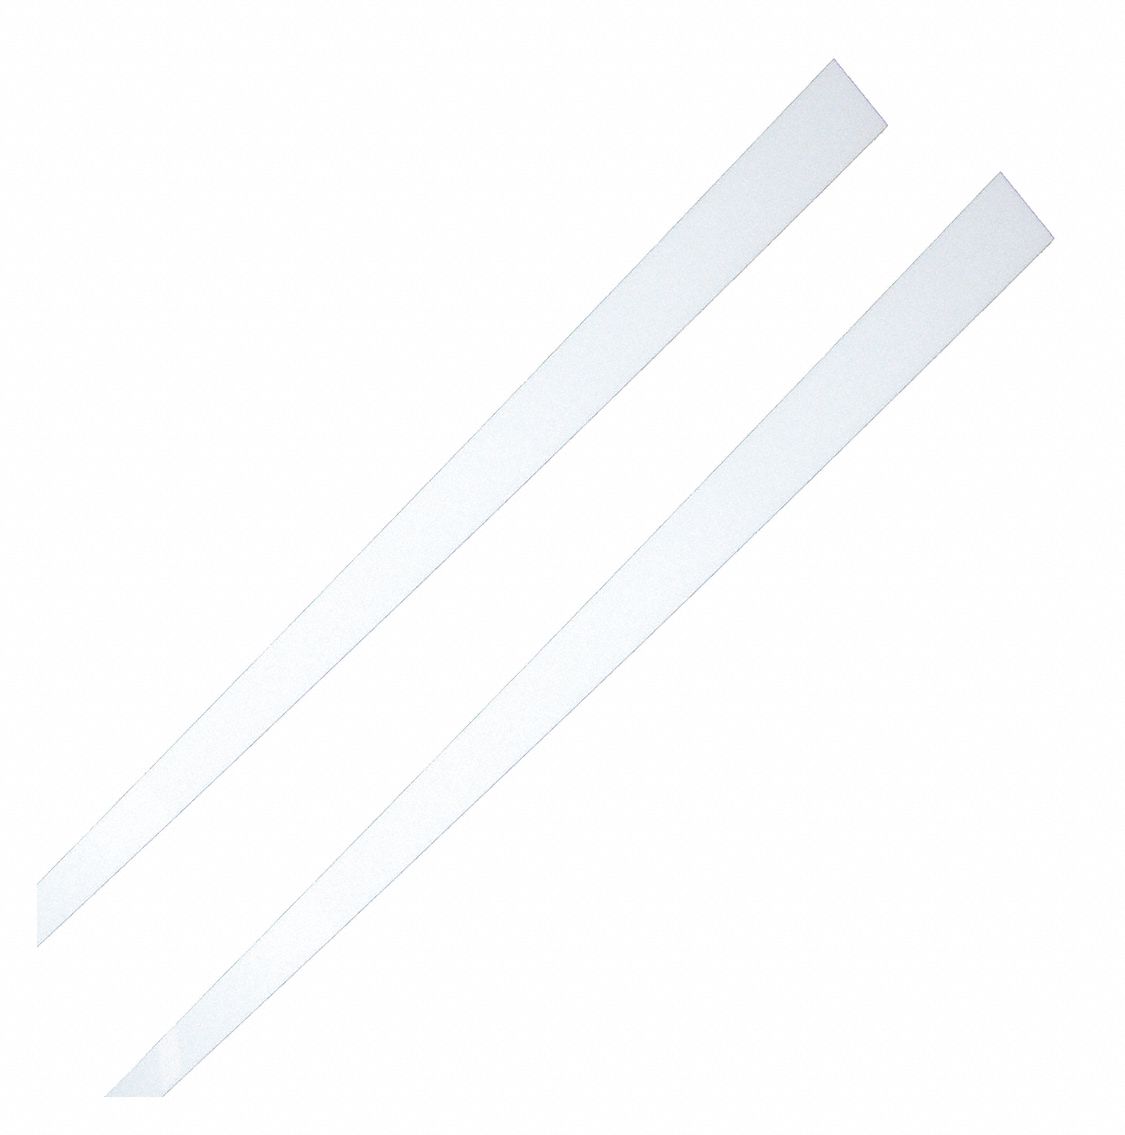 Strips: White, White Acrylic, White Acrylic, 1/8 in Ht, 60 in Lg, 1 1/2 in Wd, 1 1/2 in Dp, 2 PK